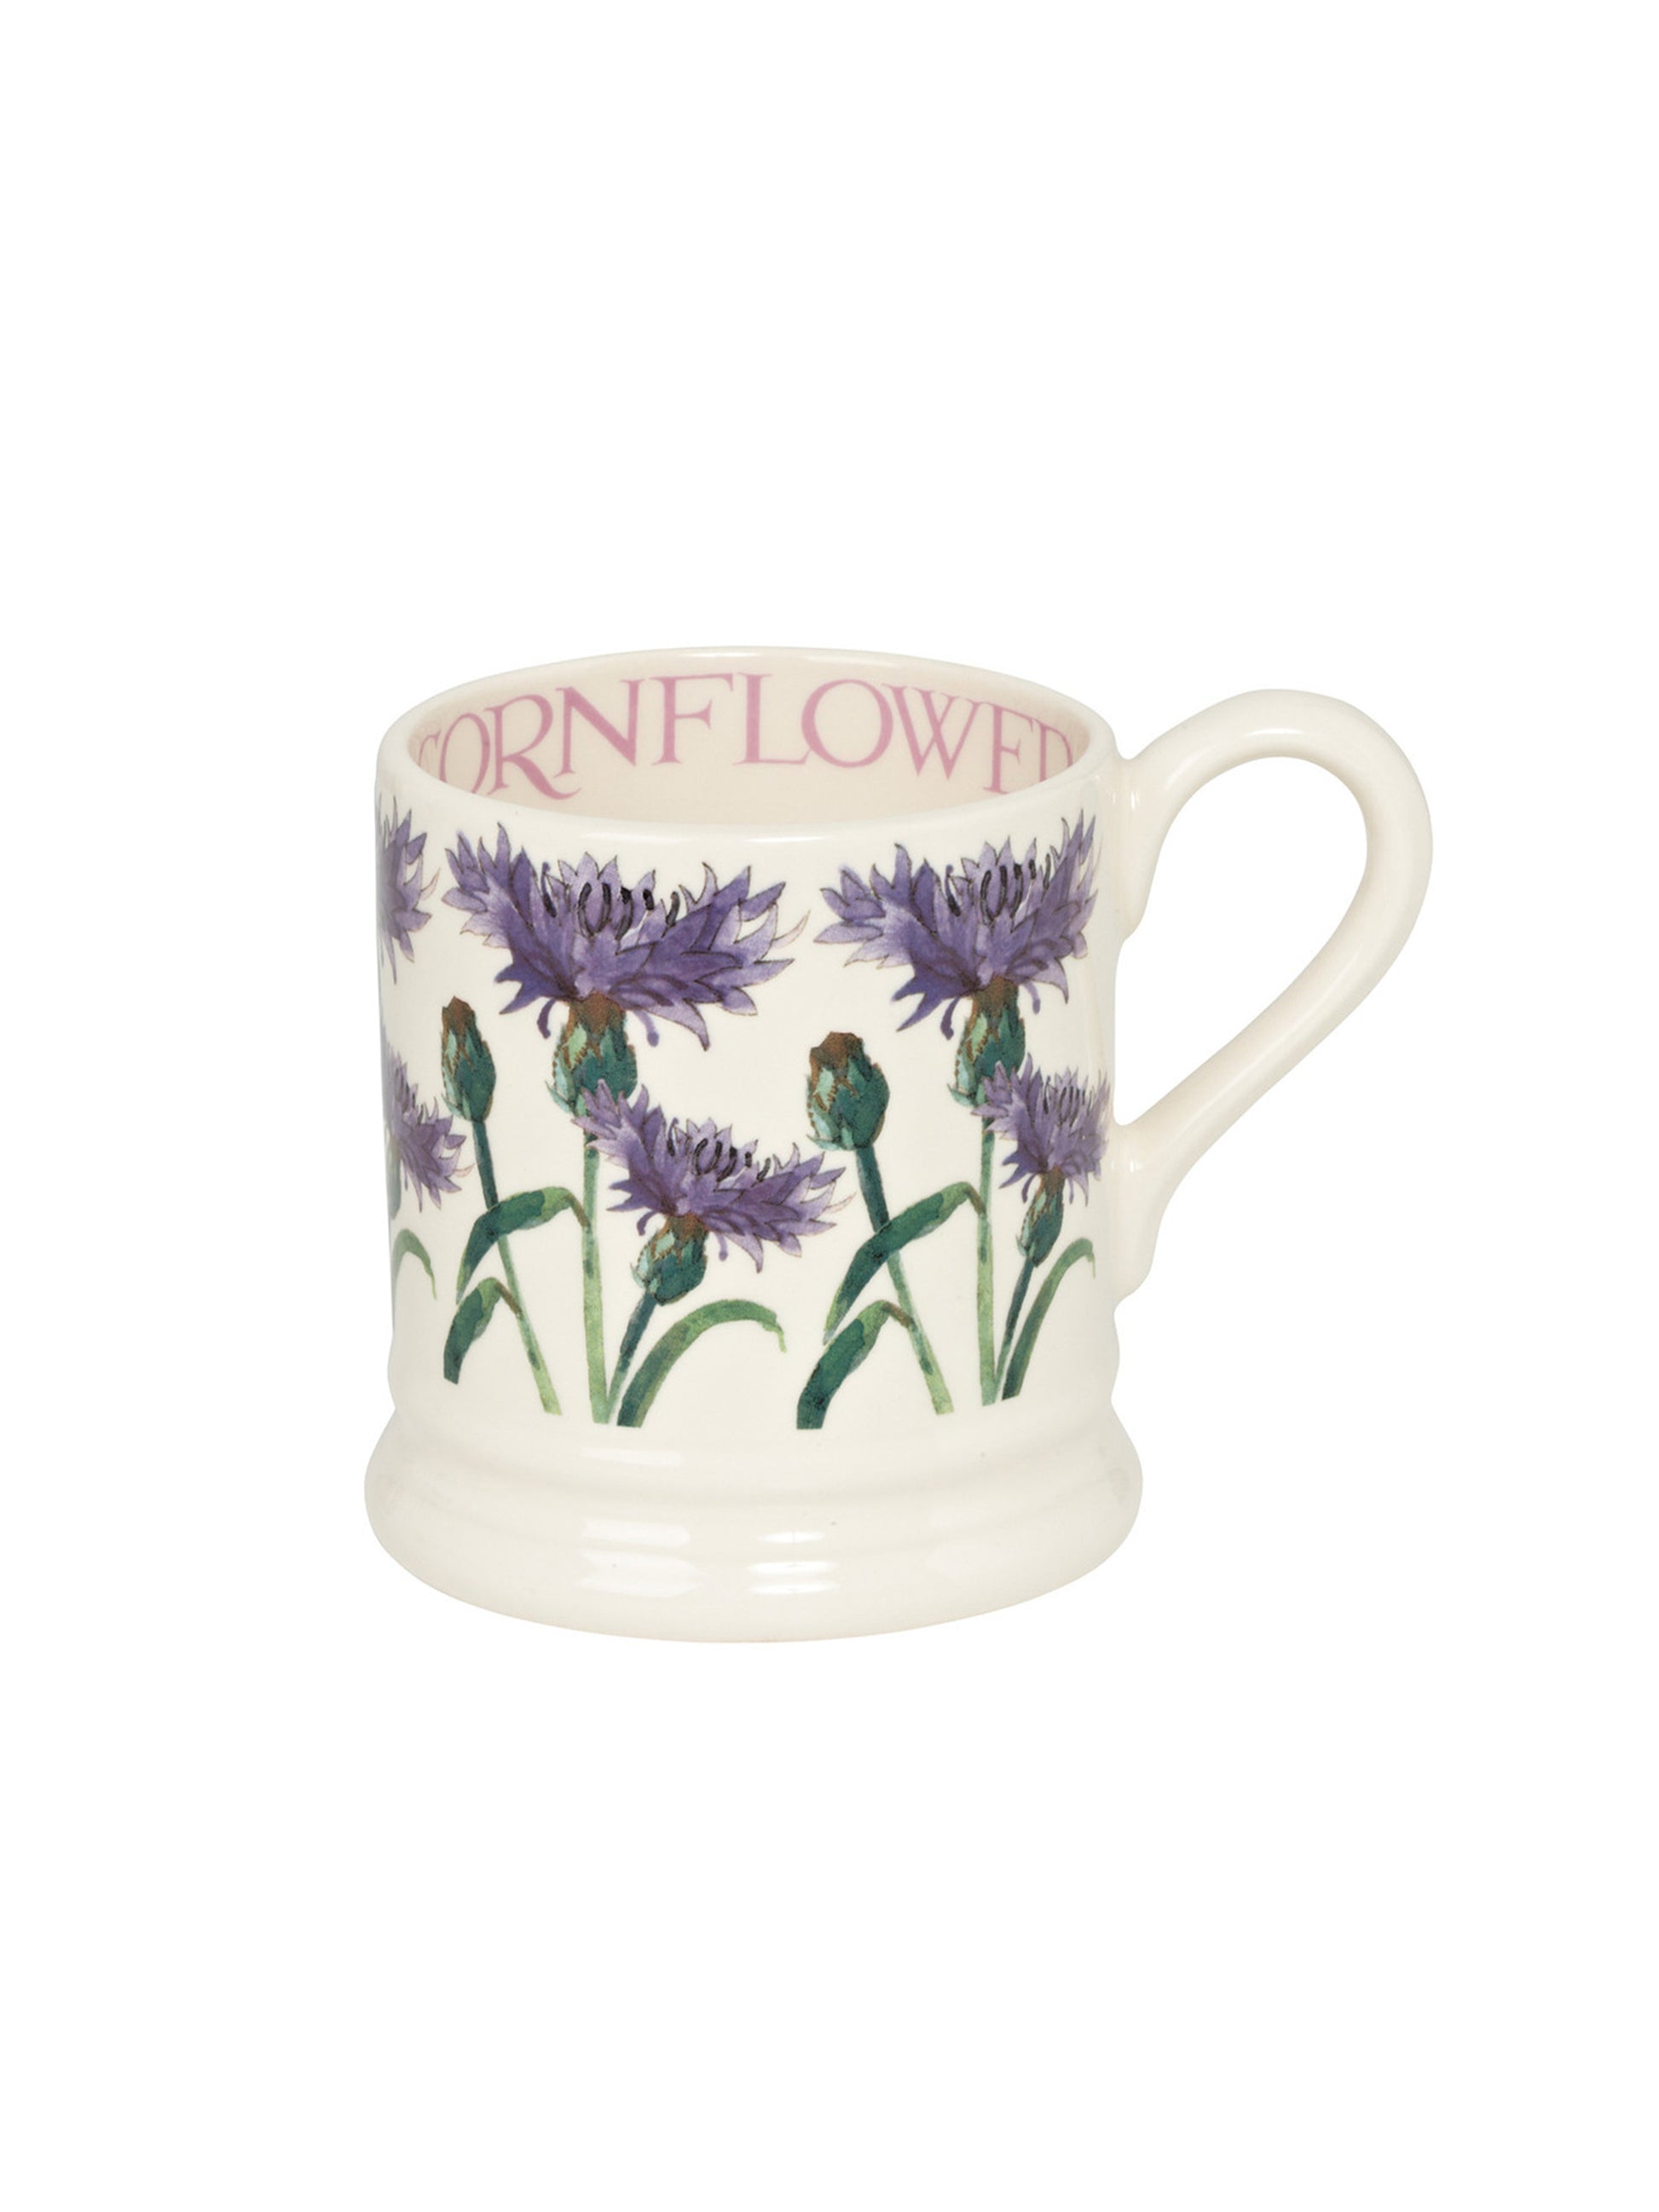 Emma Bridgewater Handmade Ceramic Landscapes Of Dreams Cornish  Beaches England Gift Half-Pint Coffee and Tea Mug: Coffee Cups & Mugs